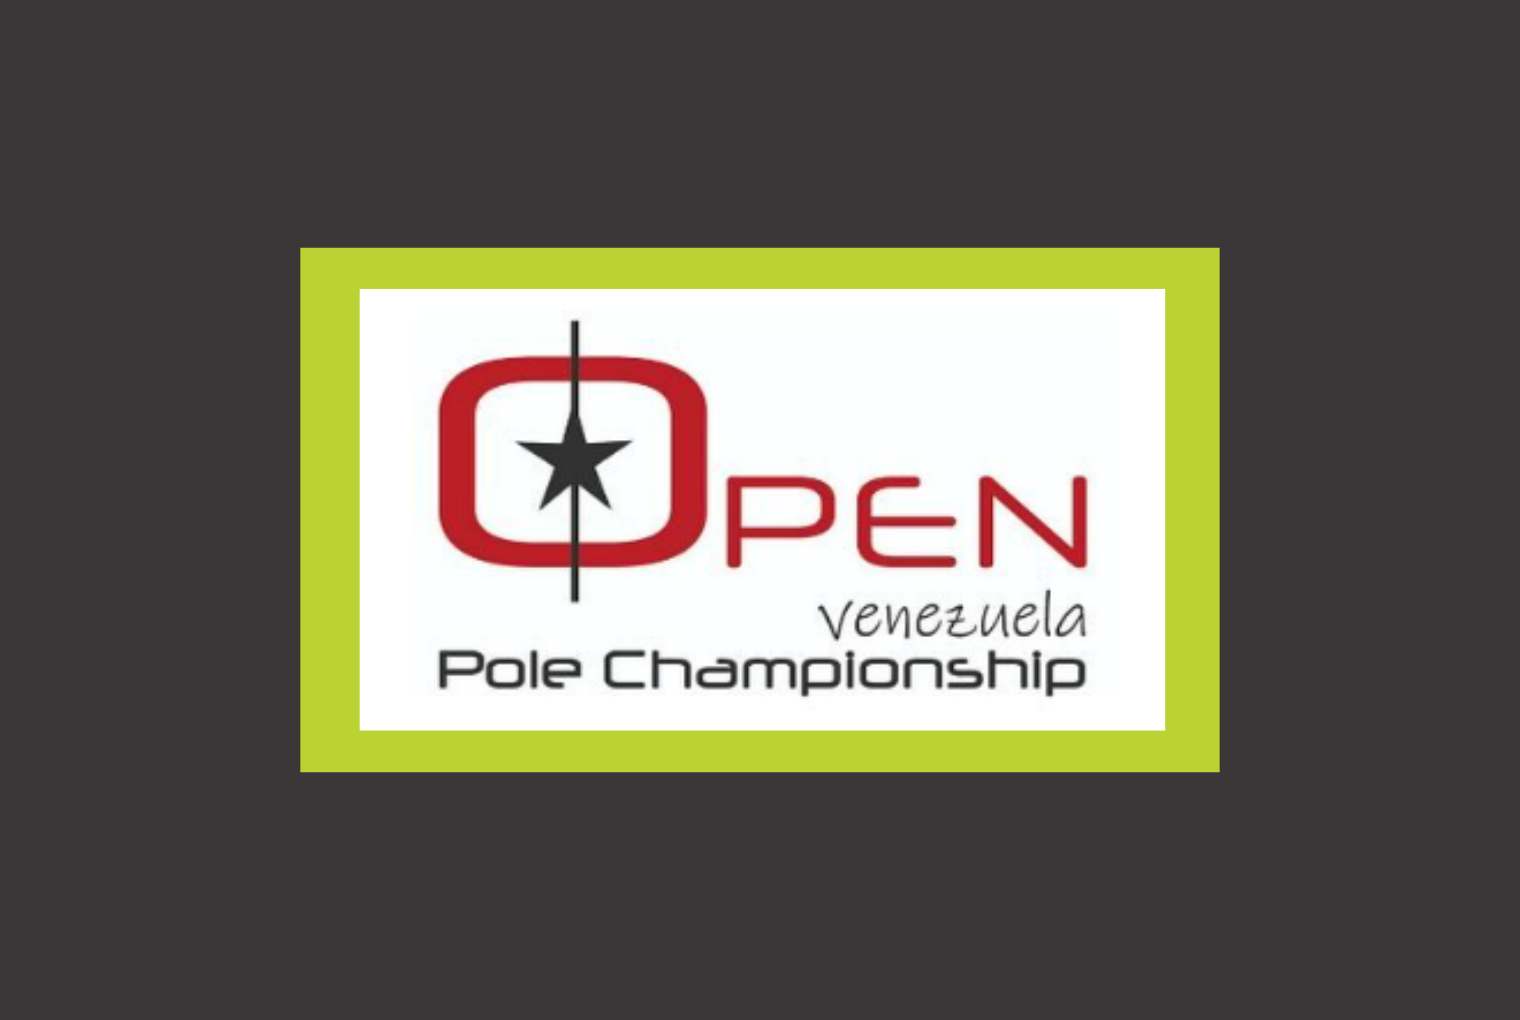 open venezuela pole championship